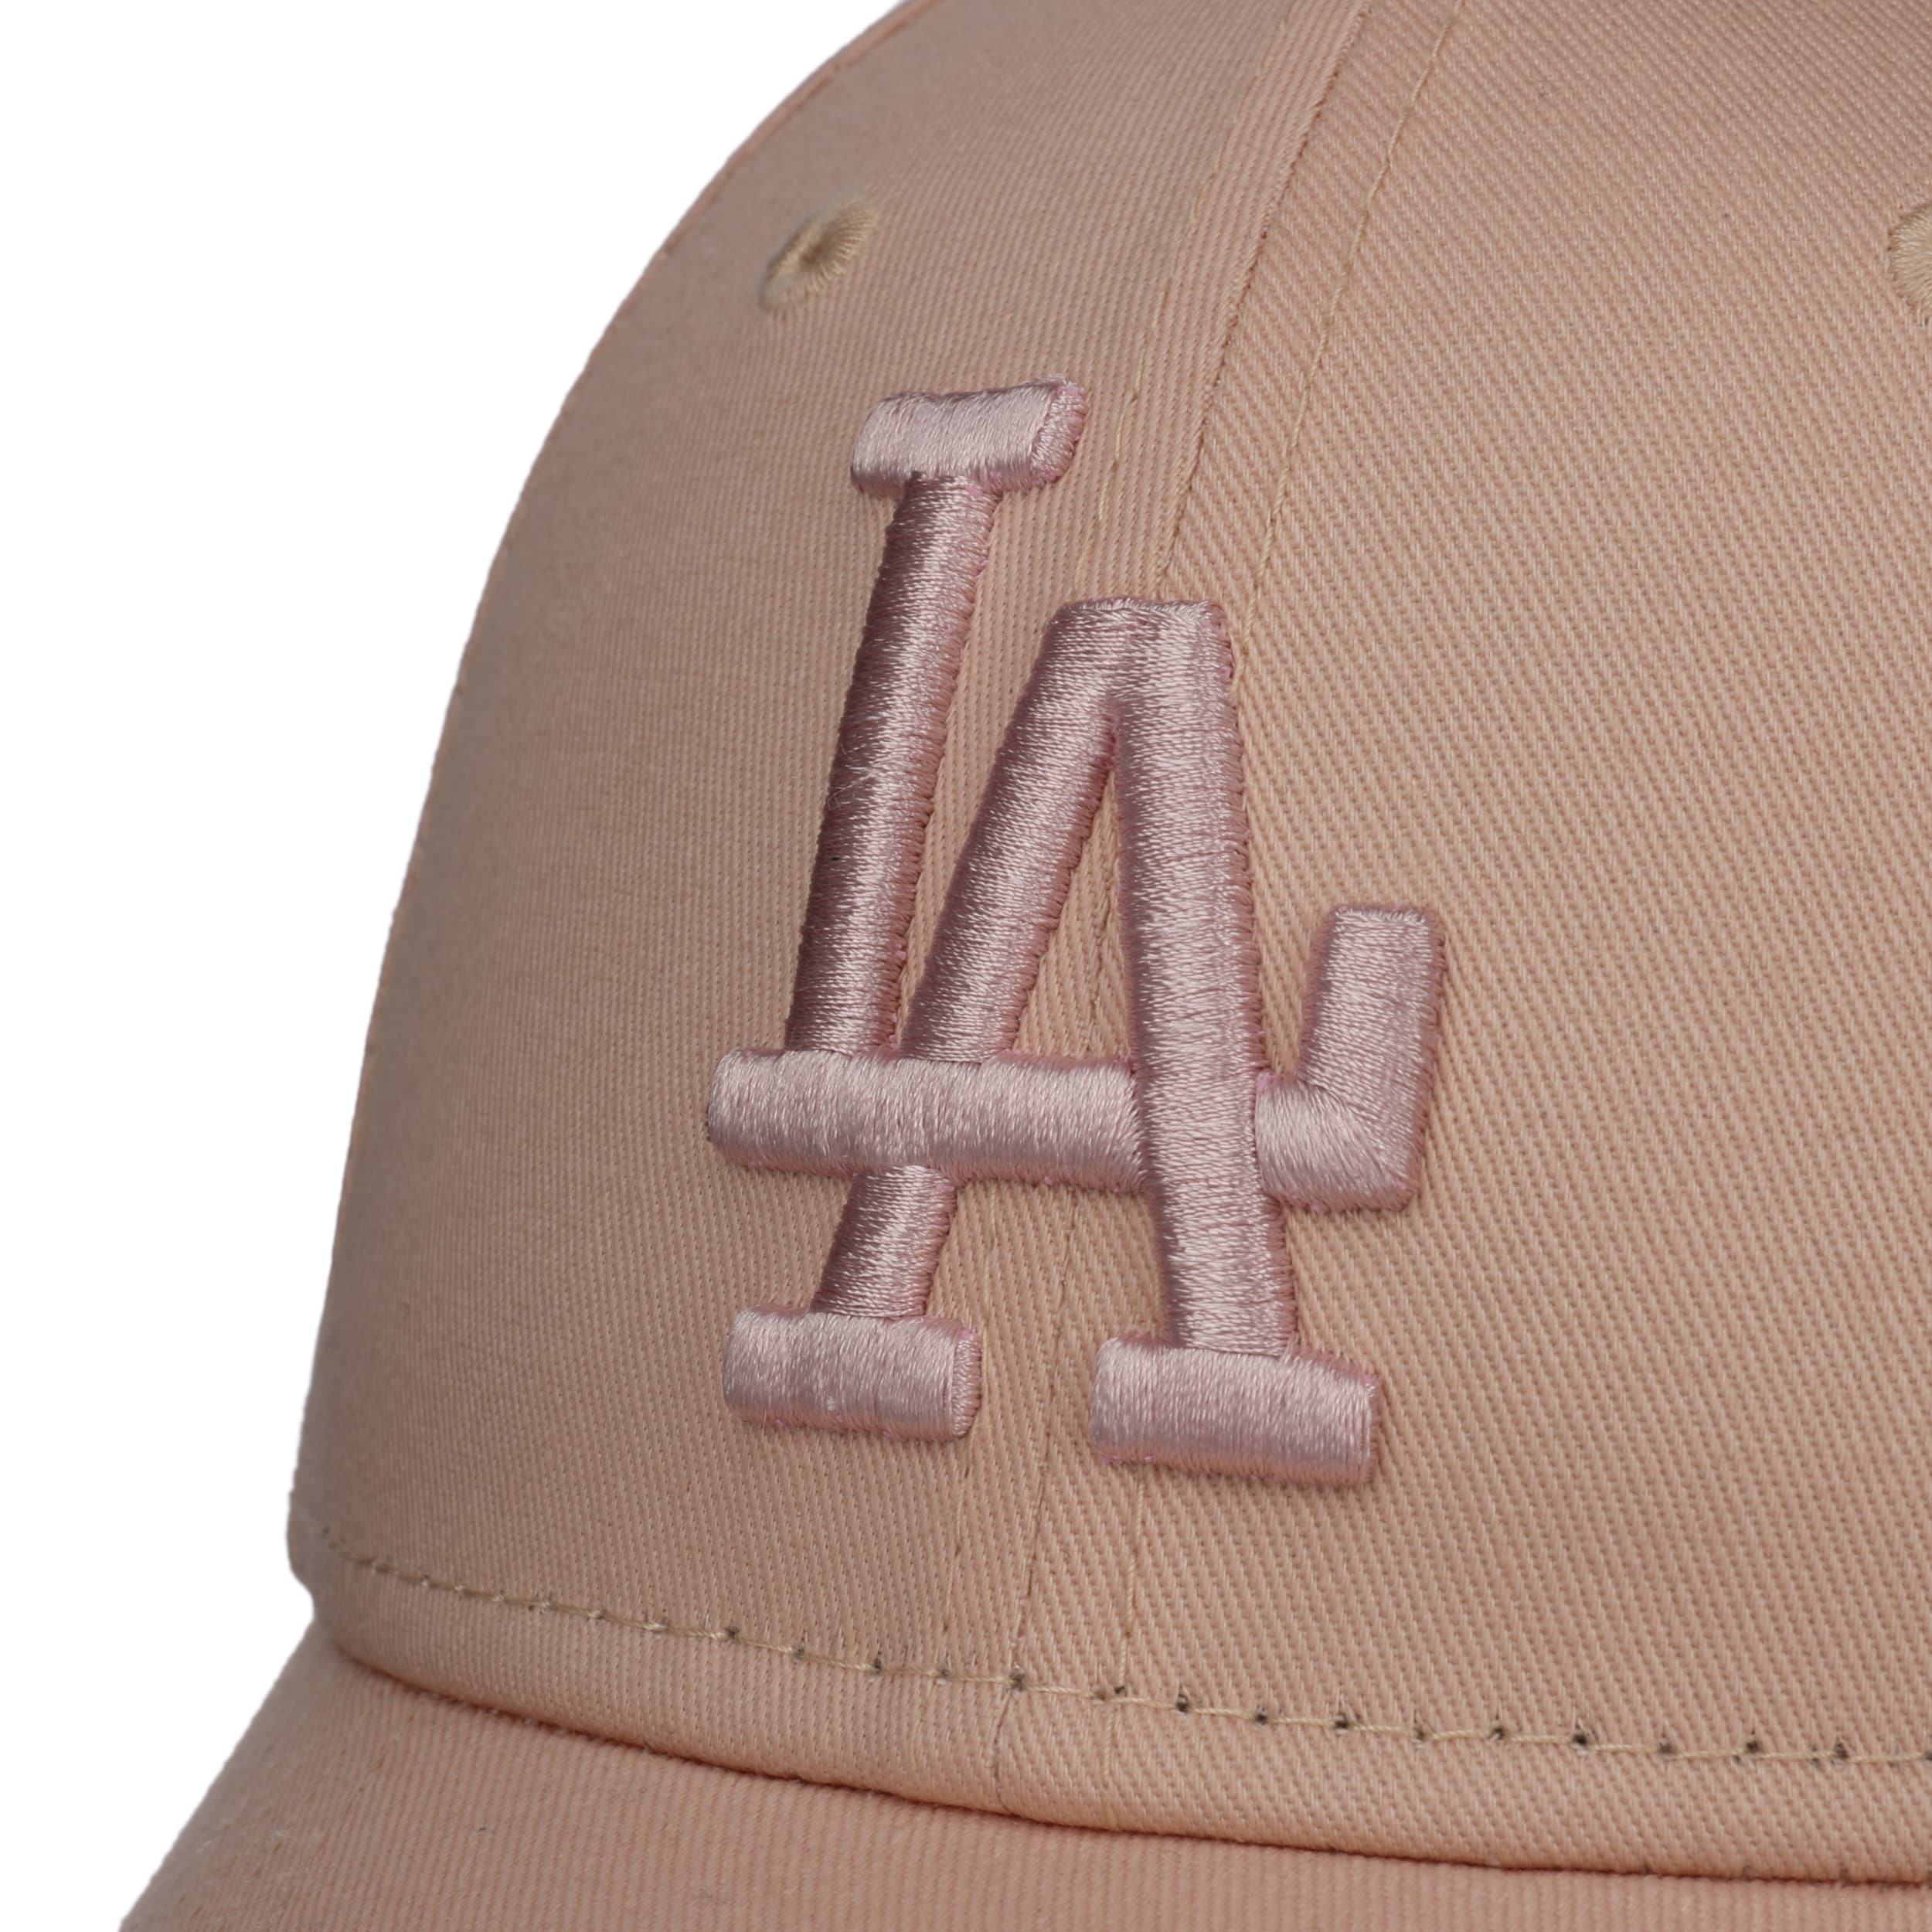 New Era - Los Angeles Dodgers - Women's 9FORTY Cap - Stone